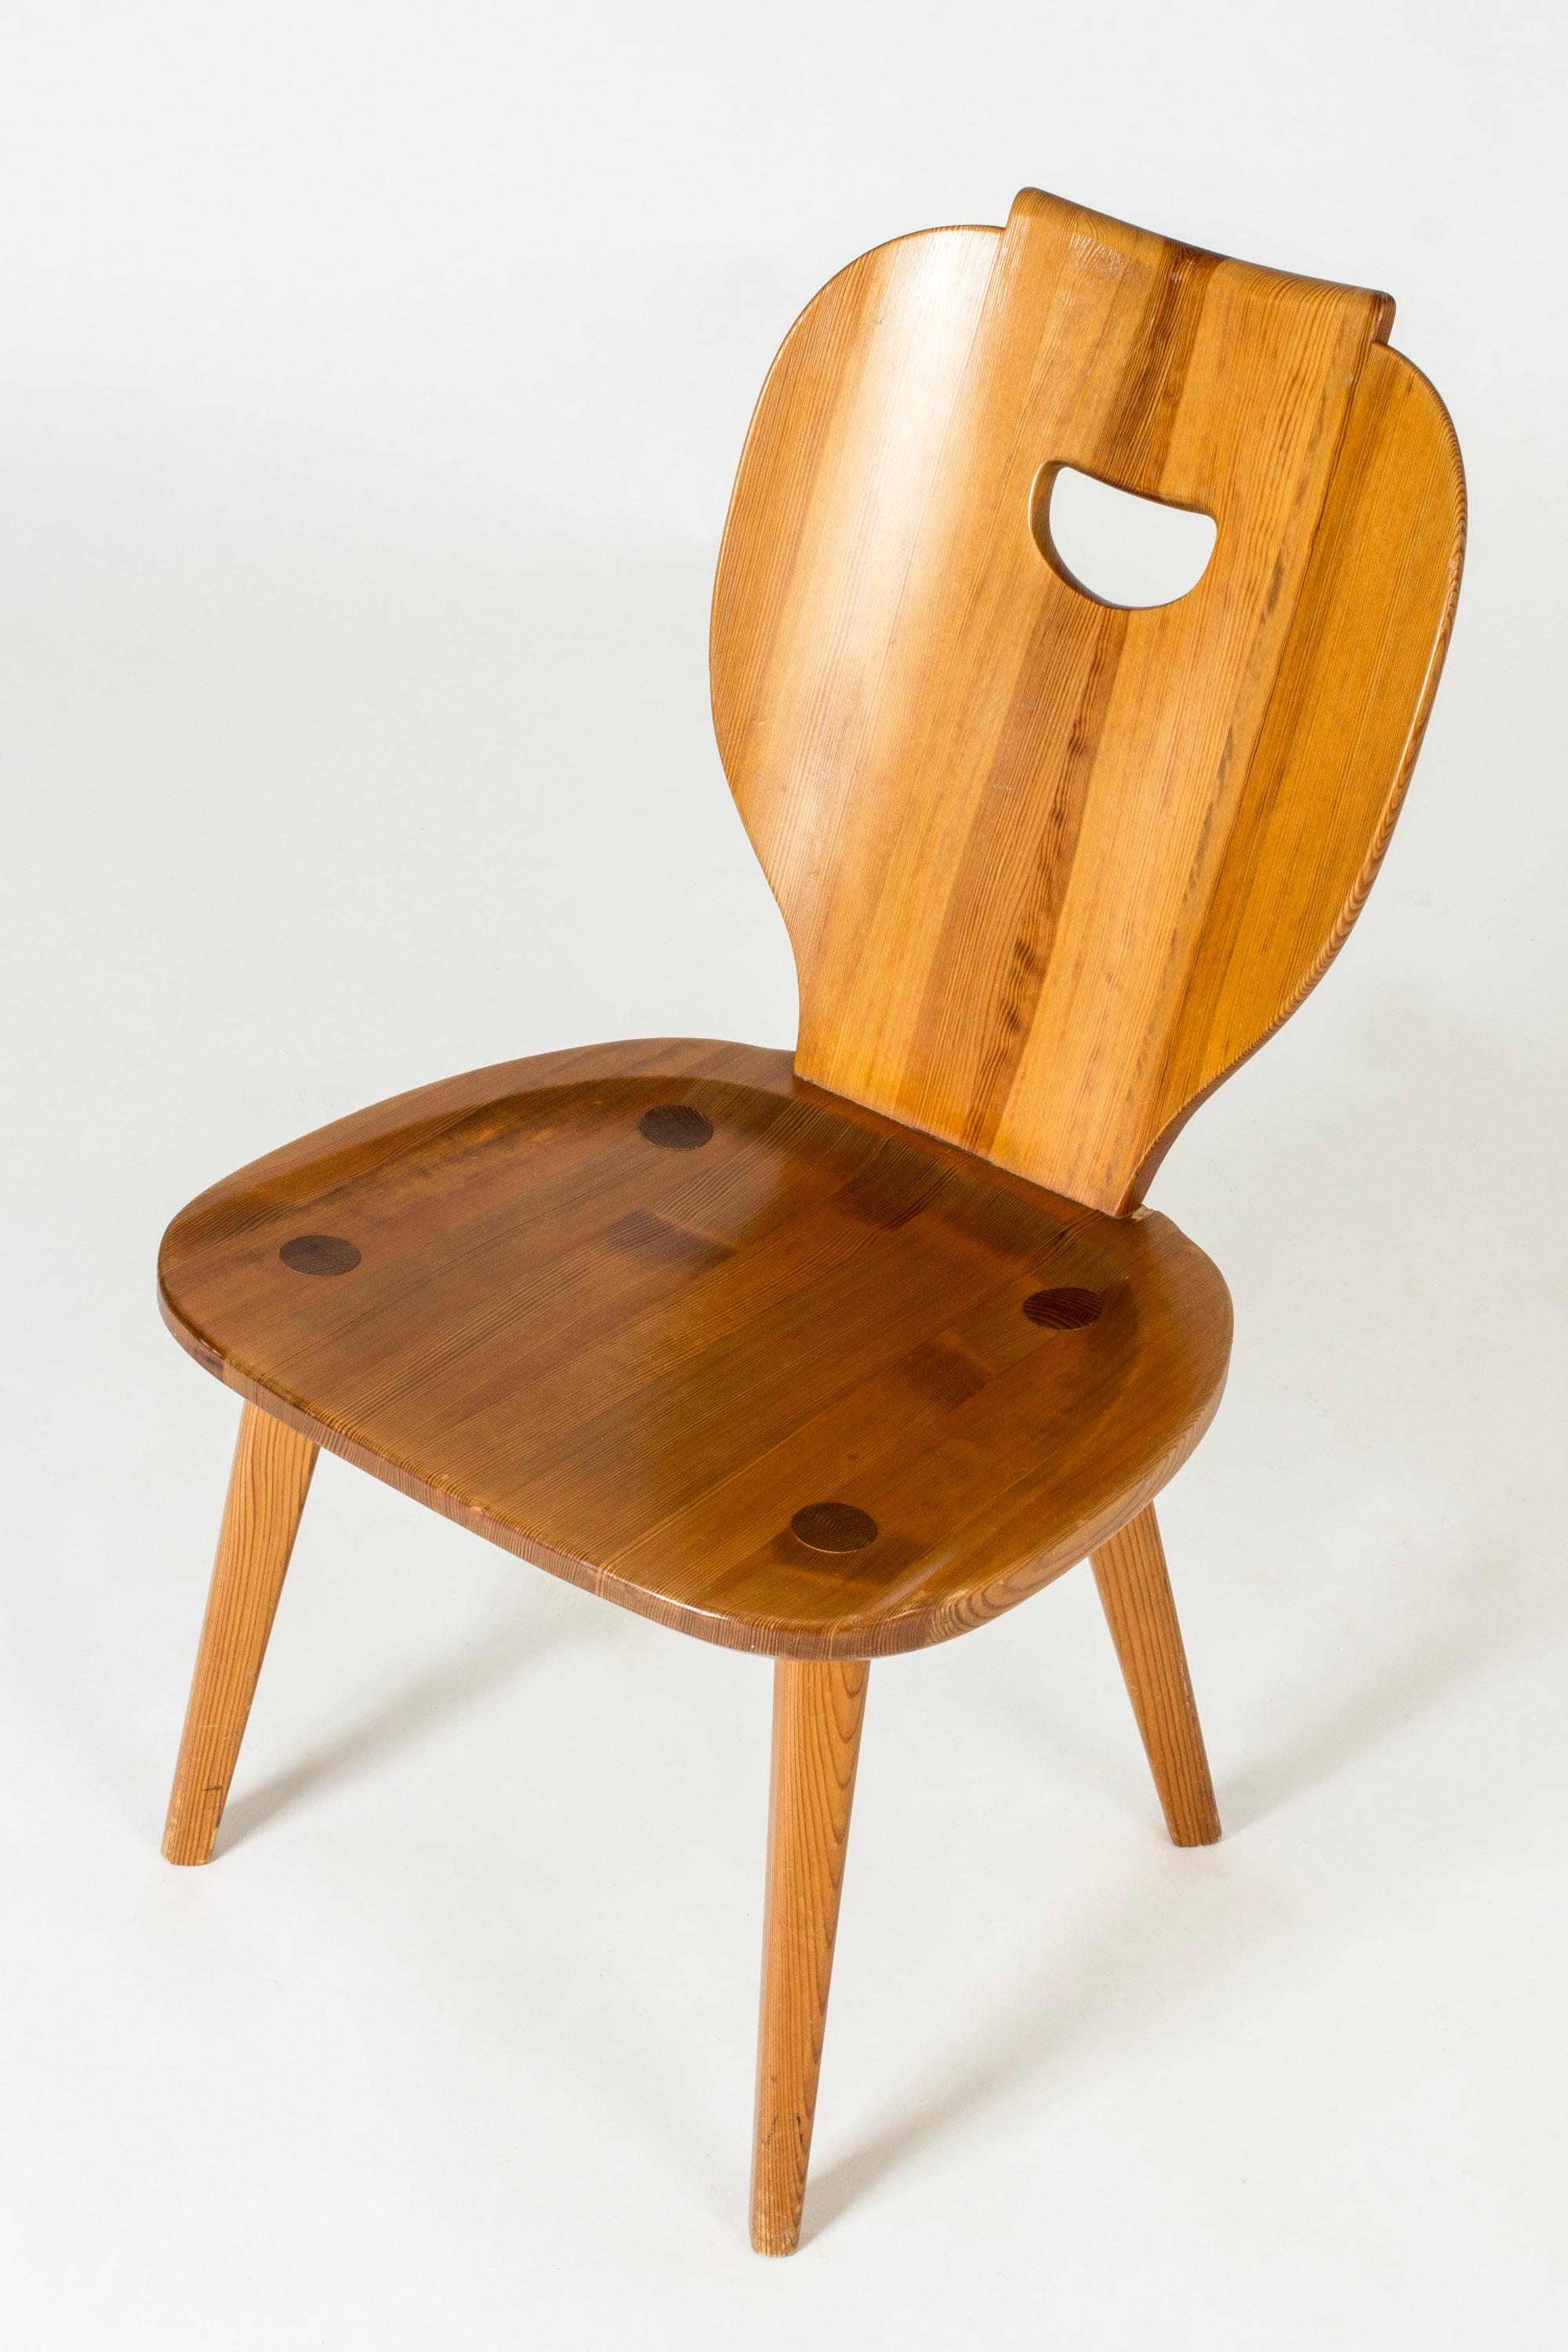 Midcentury Modern Pine Side Chair by Carl Malmsten, Svensk Fur, Sweden, 1940s For Sale 2